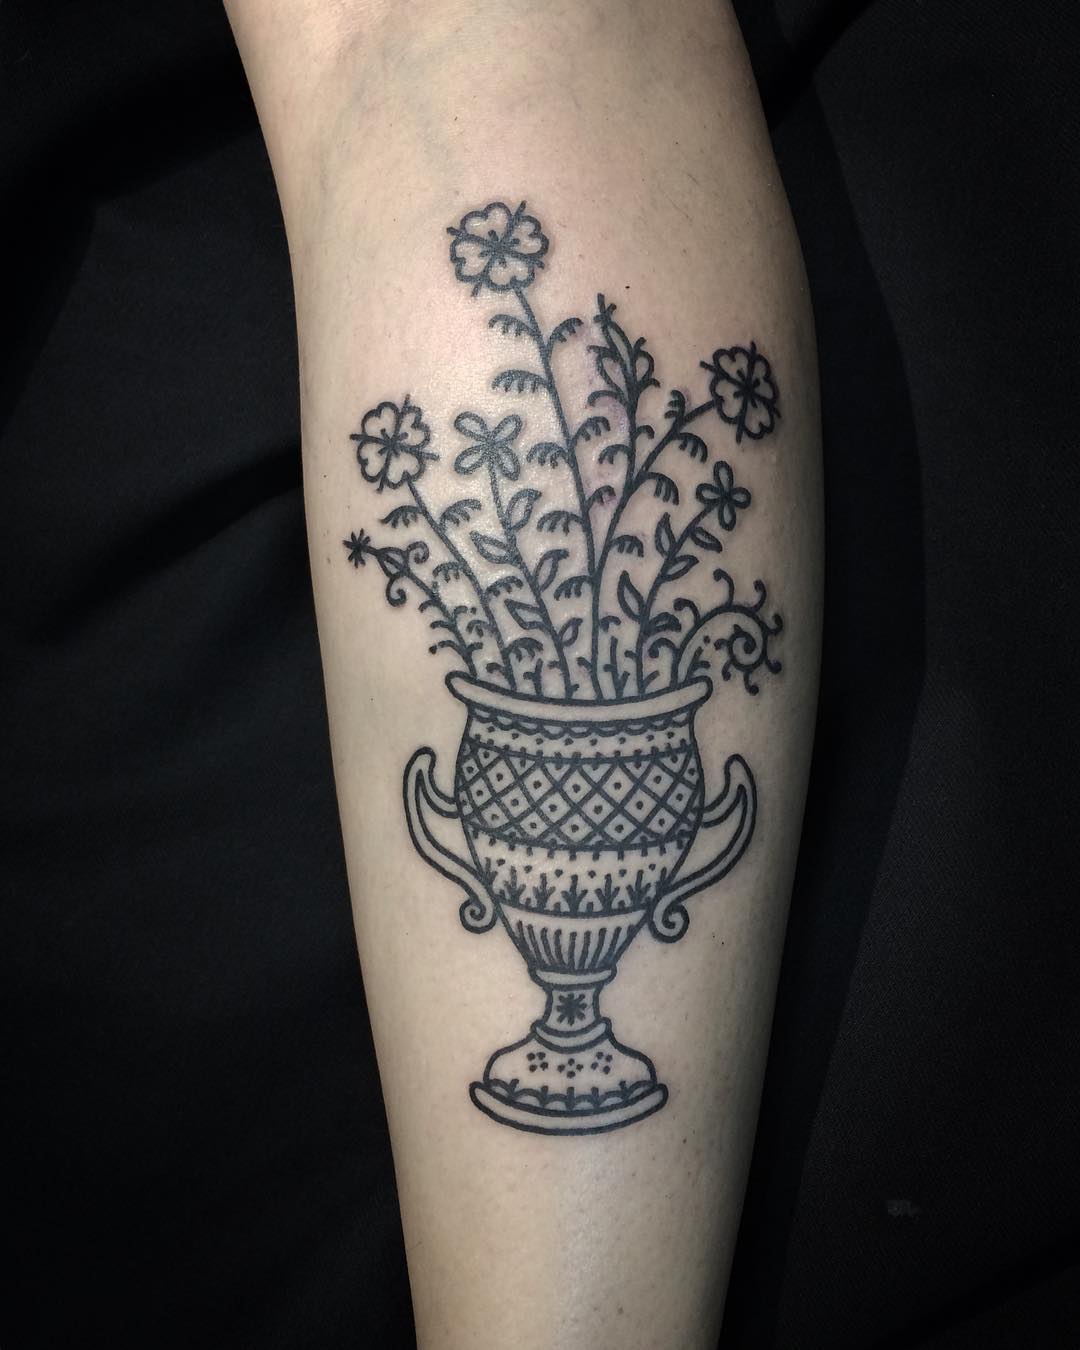 Cool flower vase by @ryanjessiman